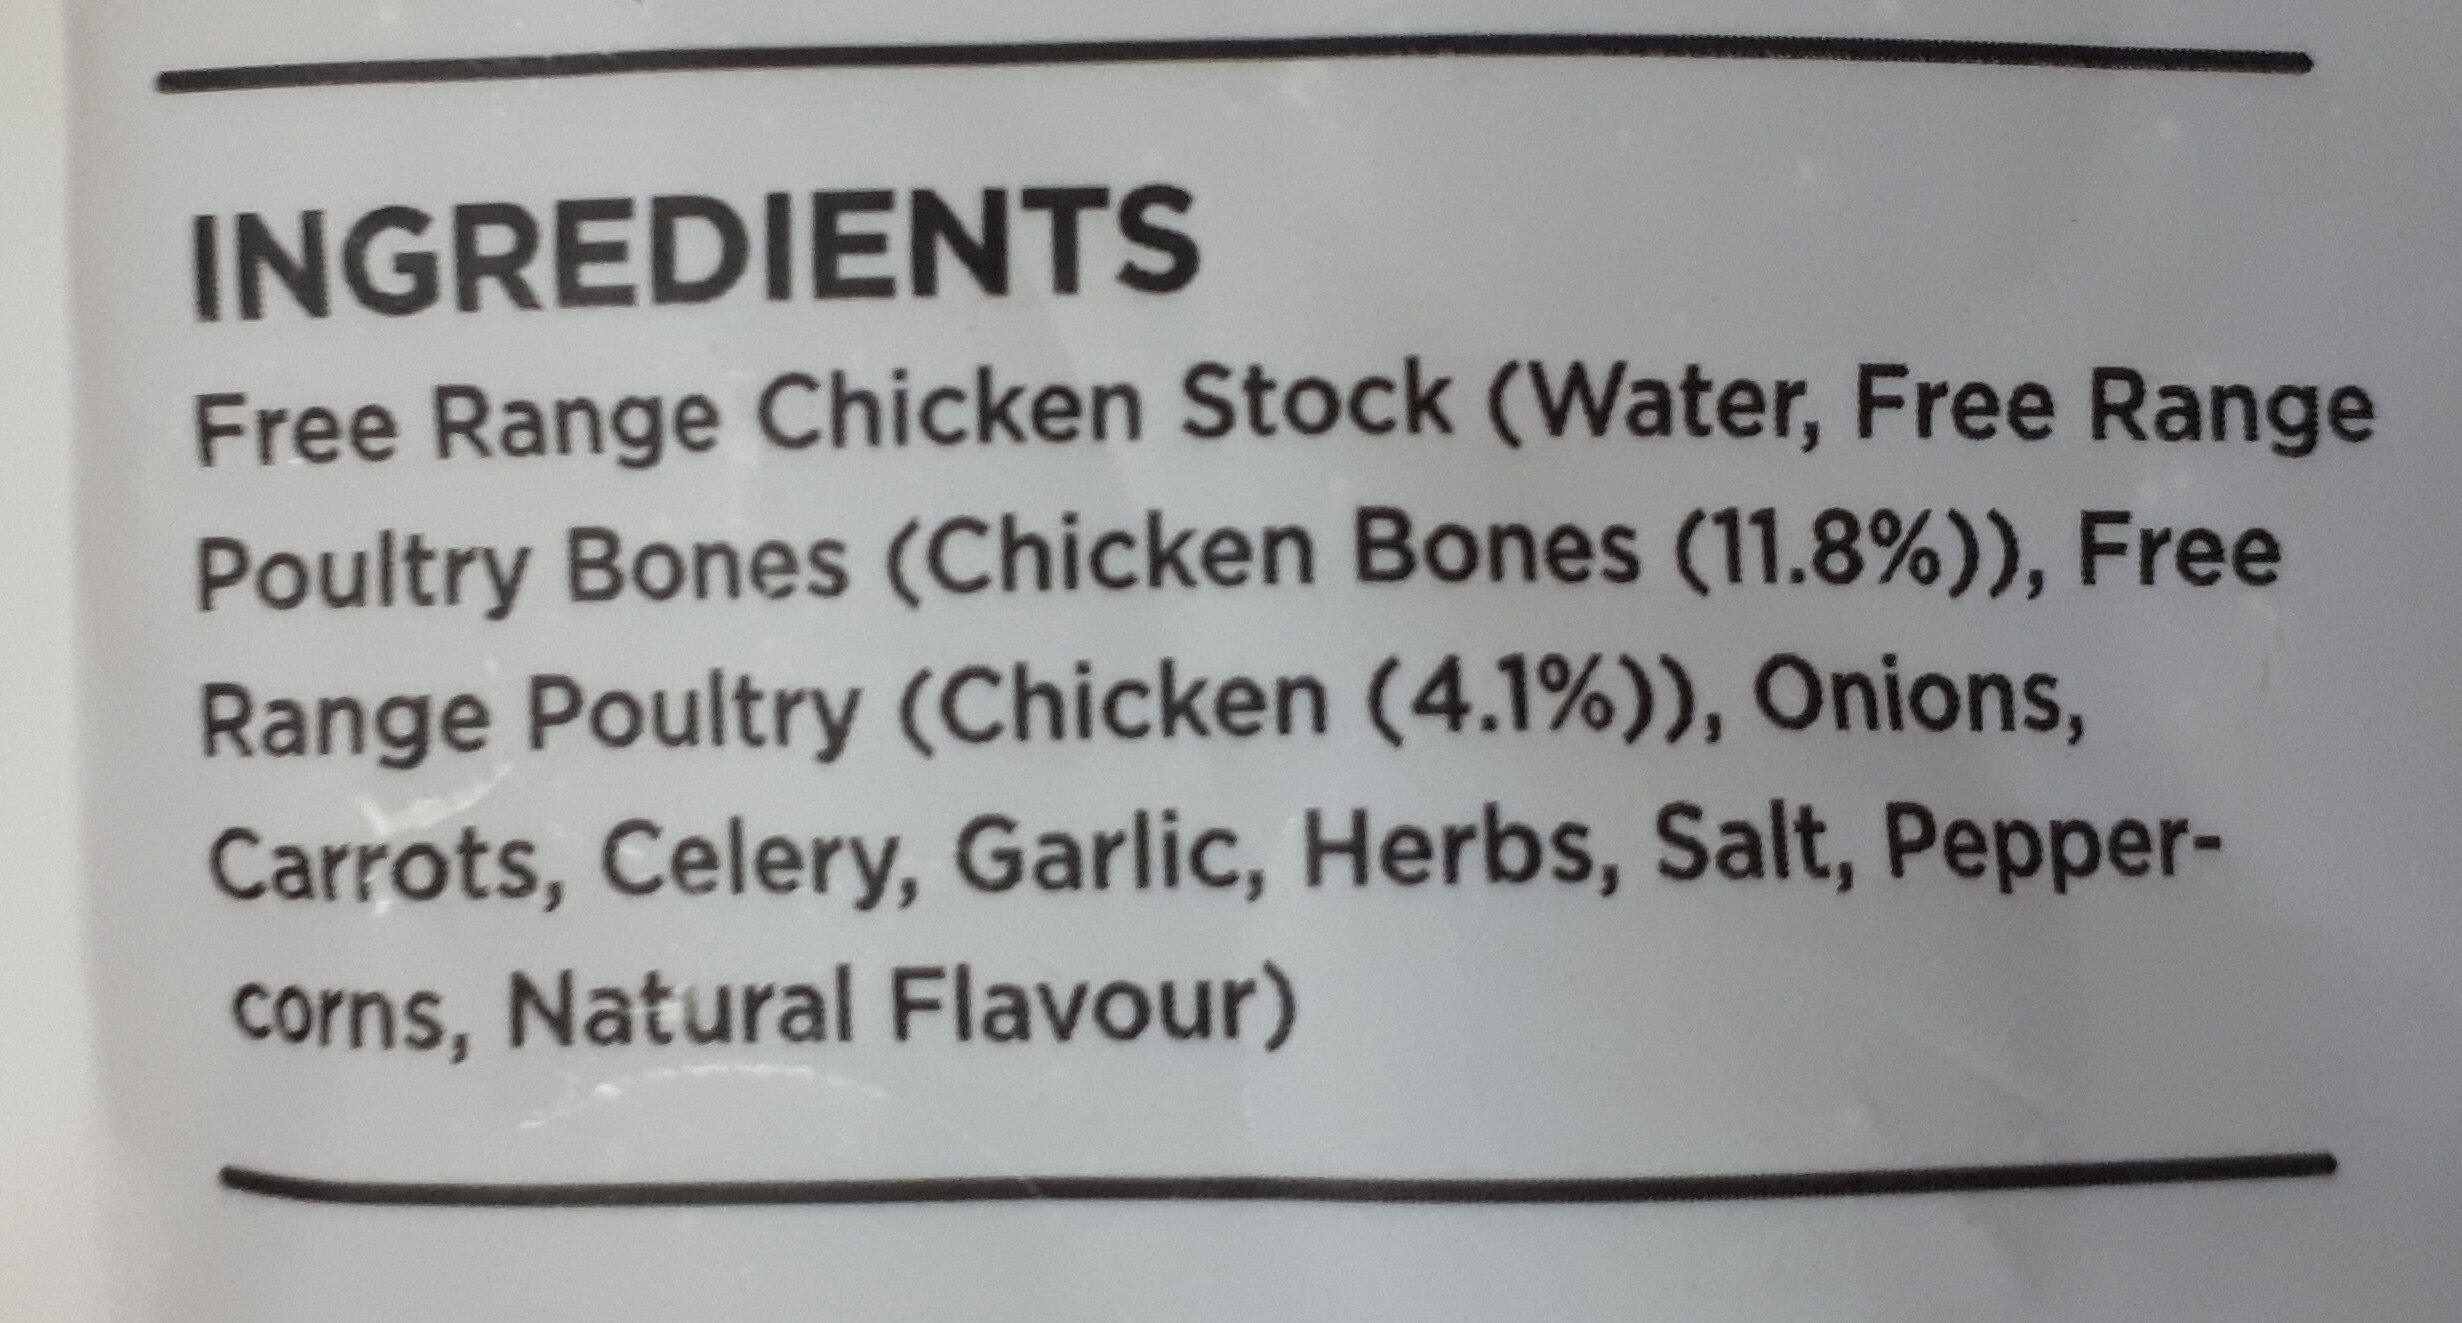 Free range chicken stock - Ingredients